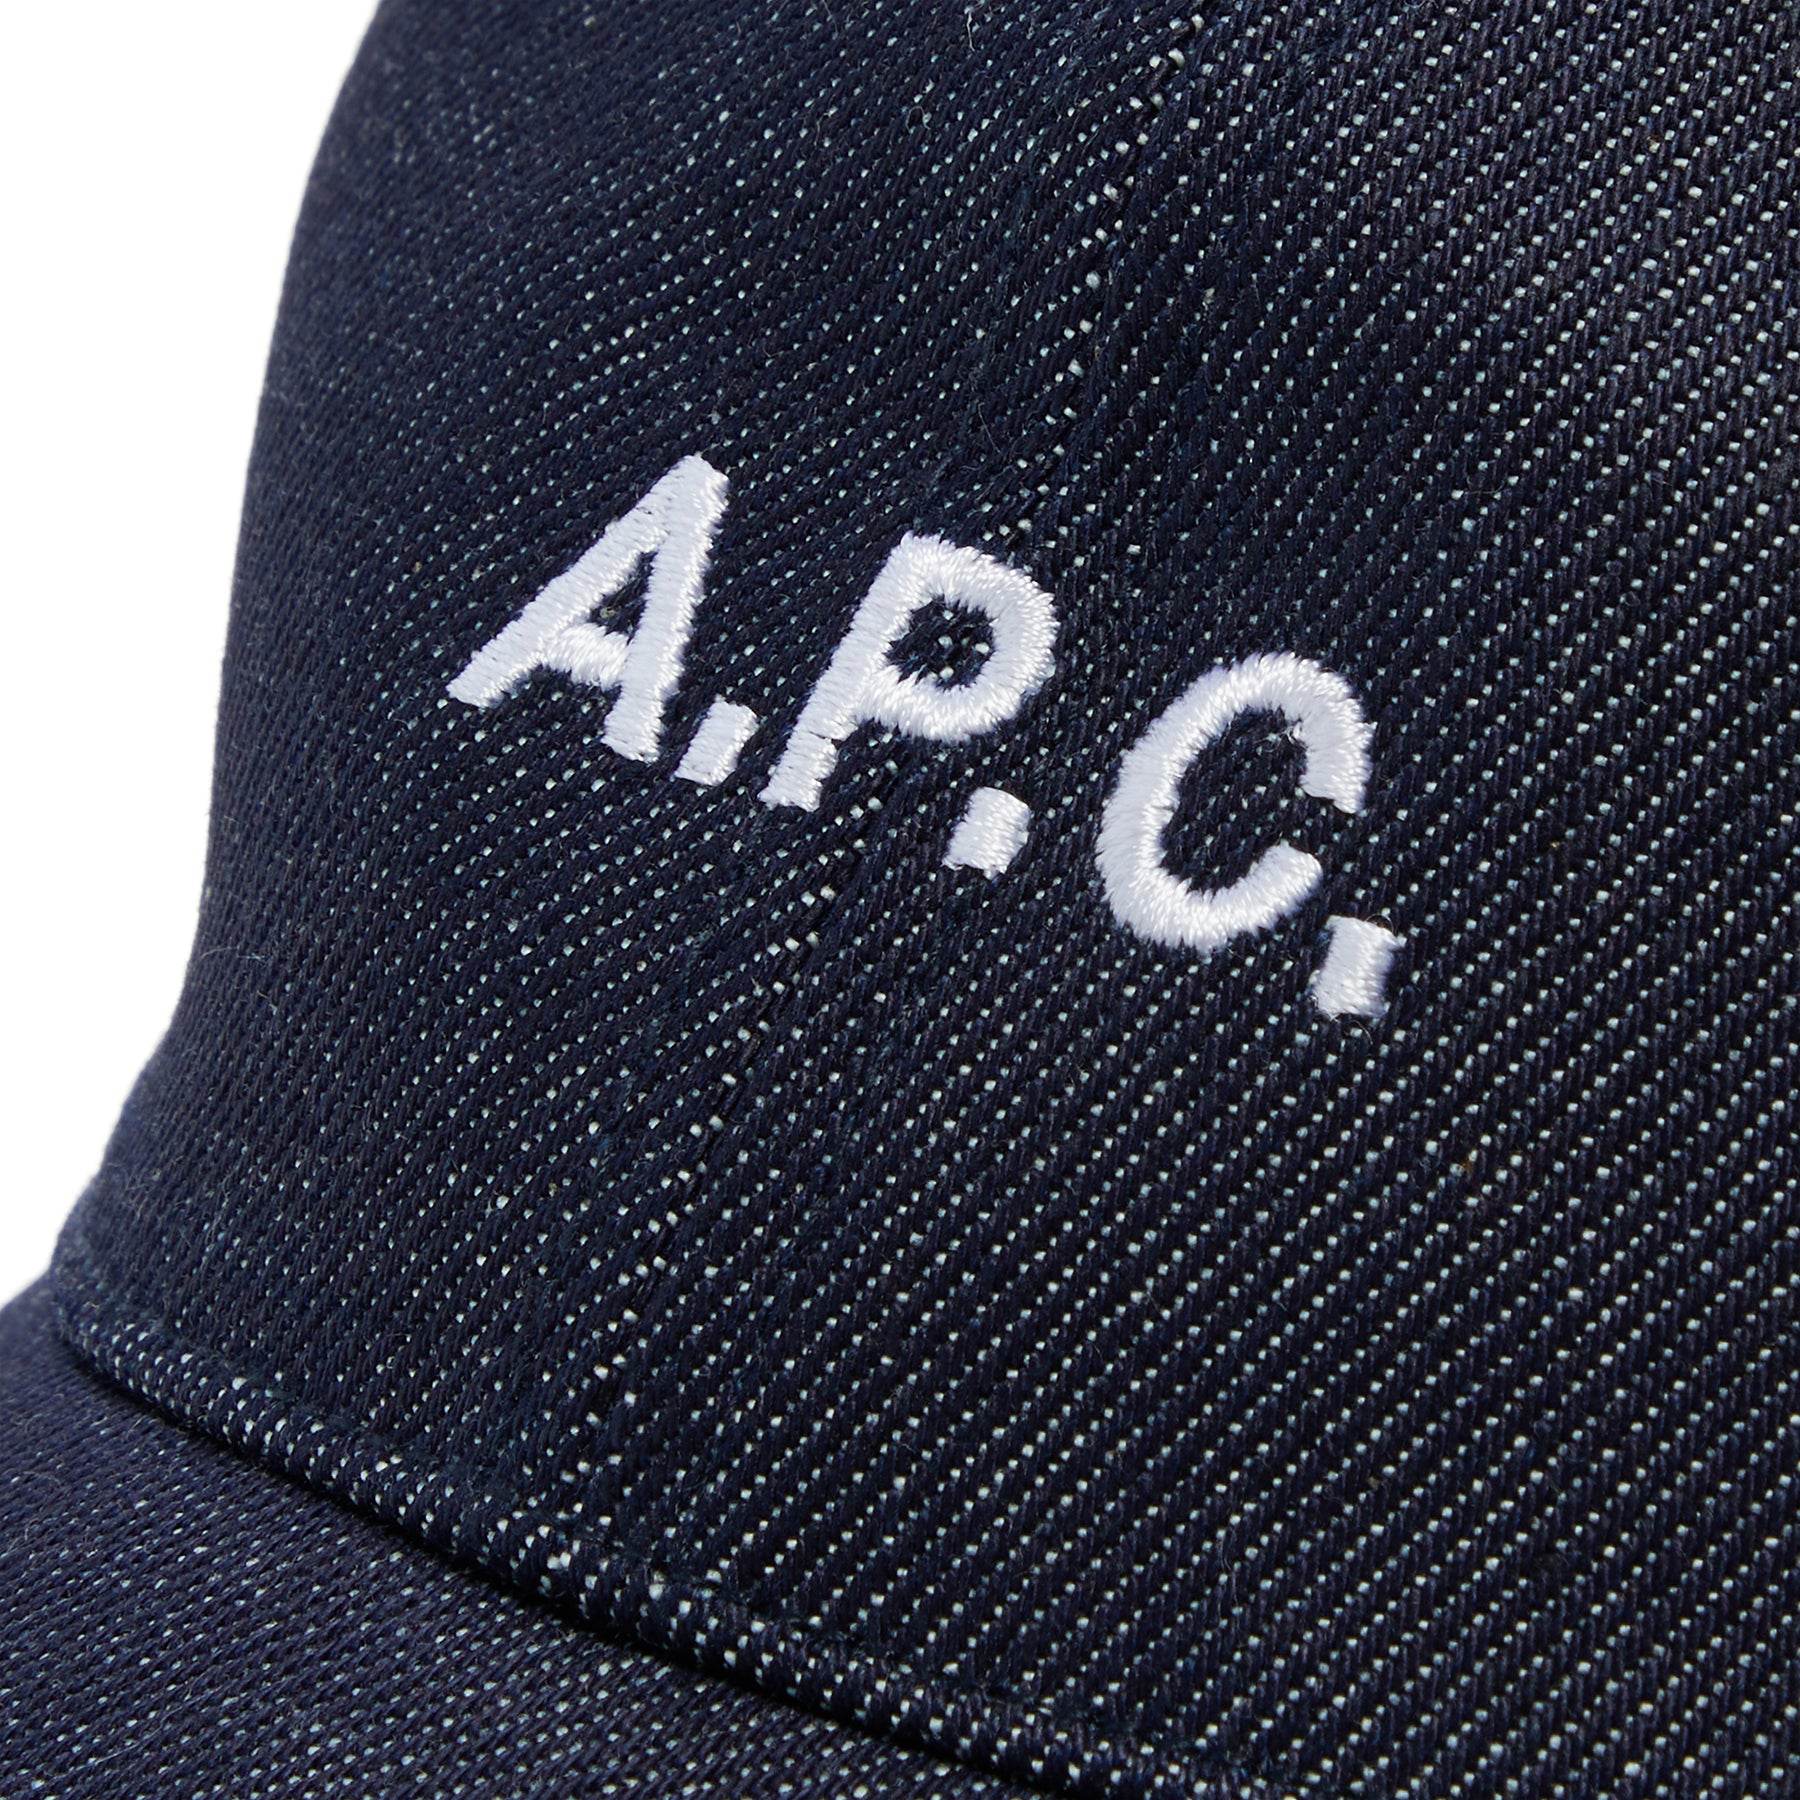 A.P.C. Casquette Charlie Hat (Indigo)